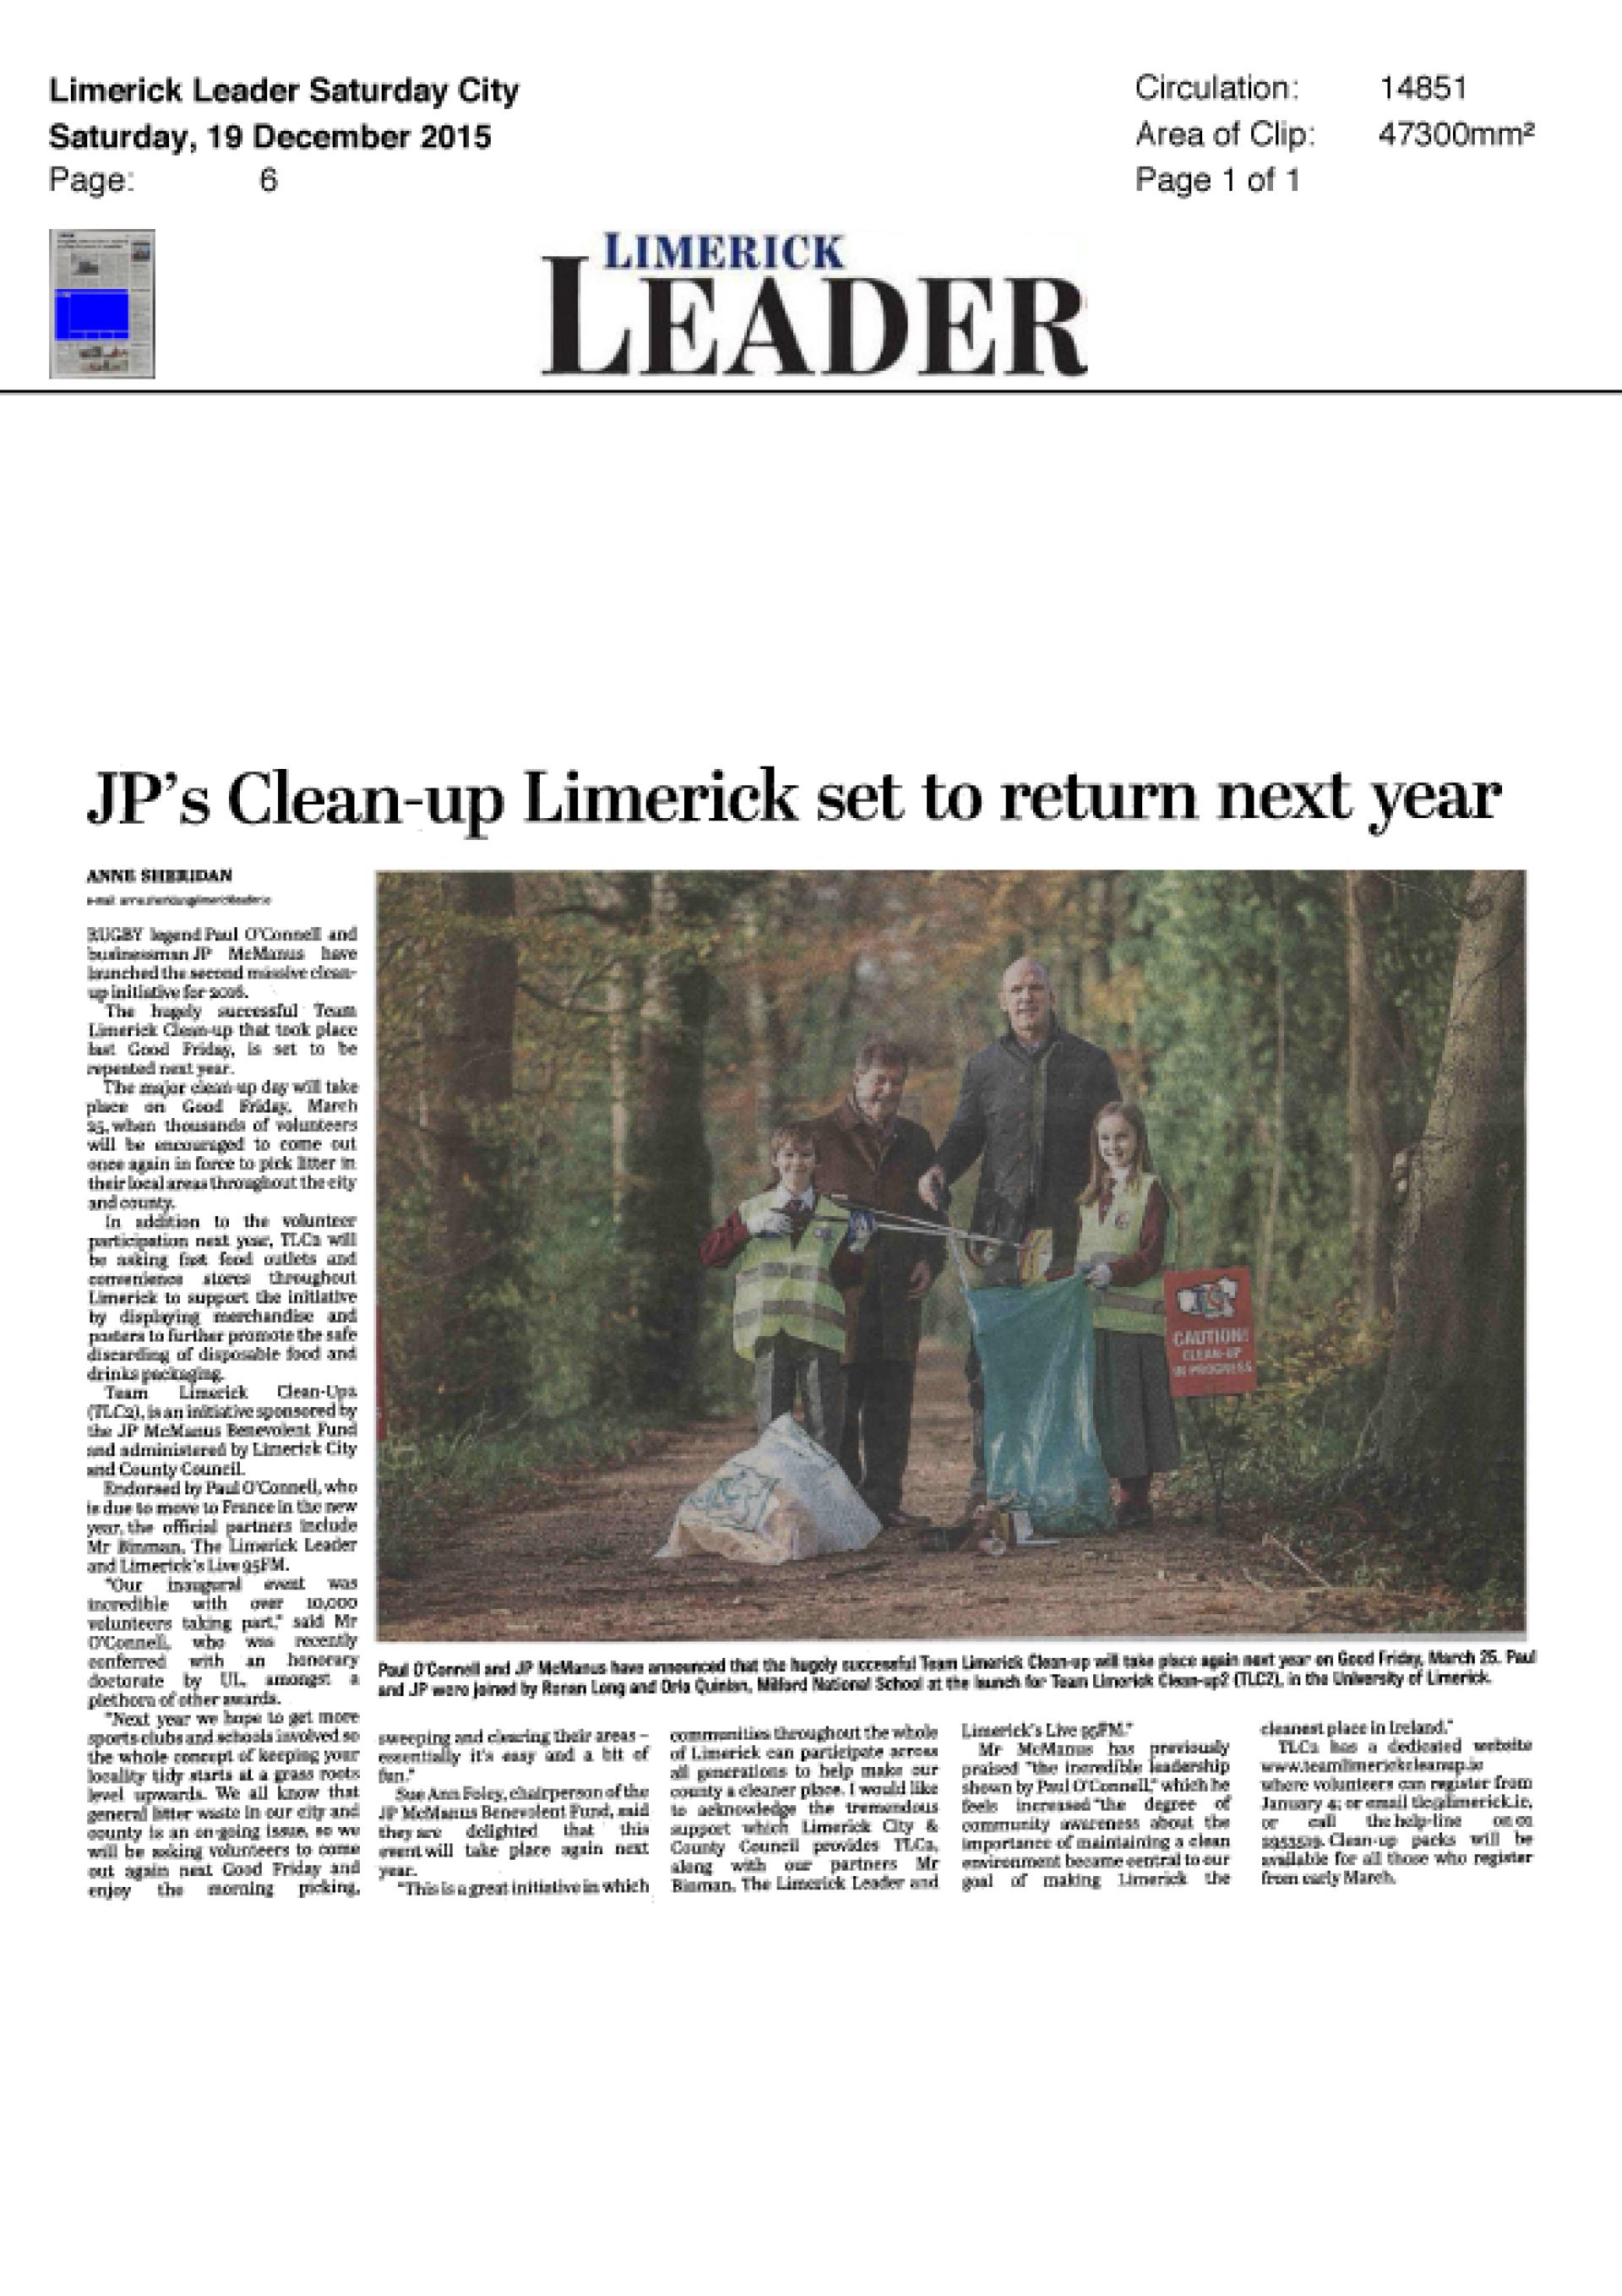 Limerick Leader Launch article